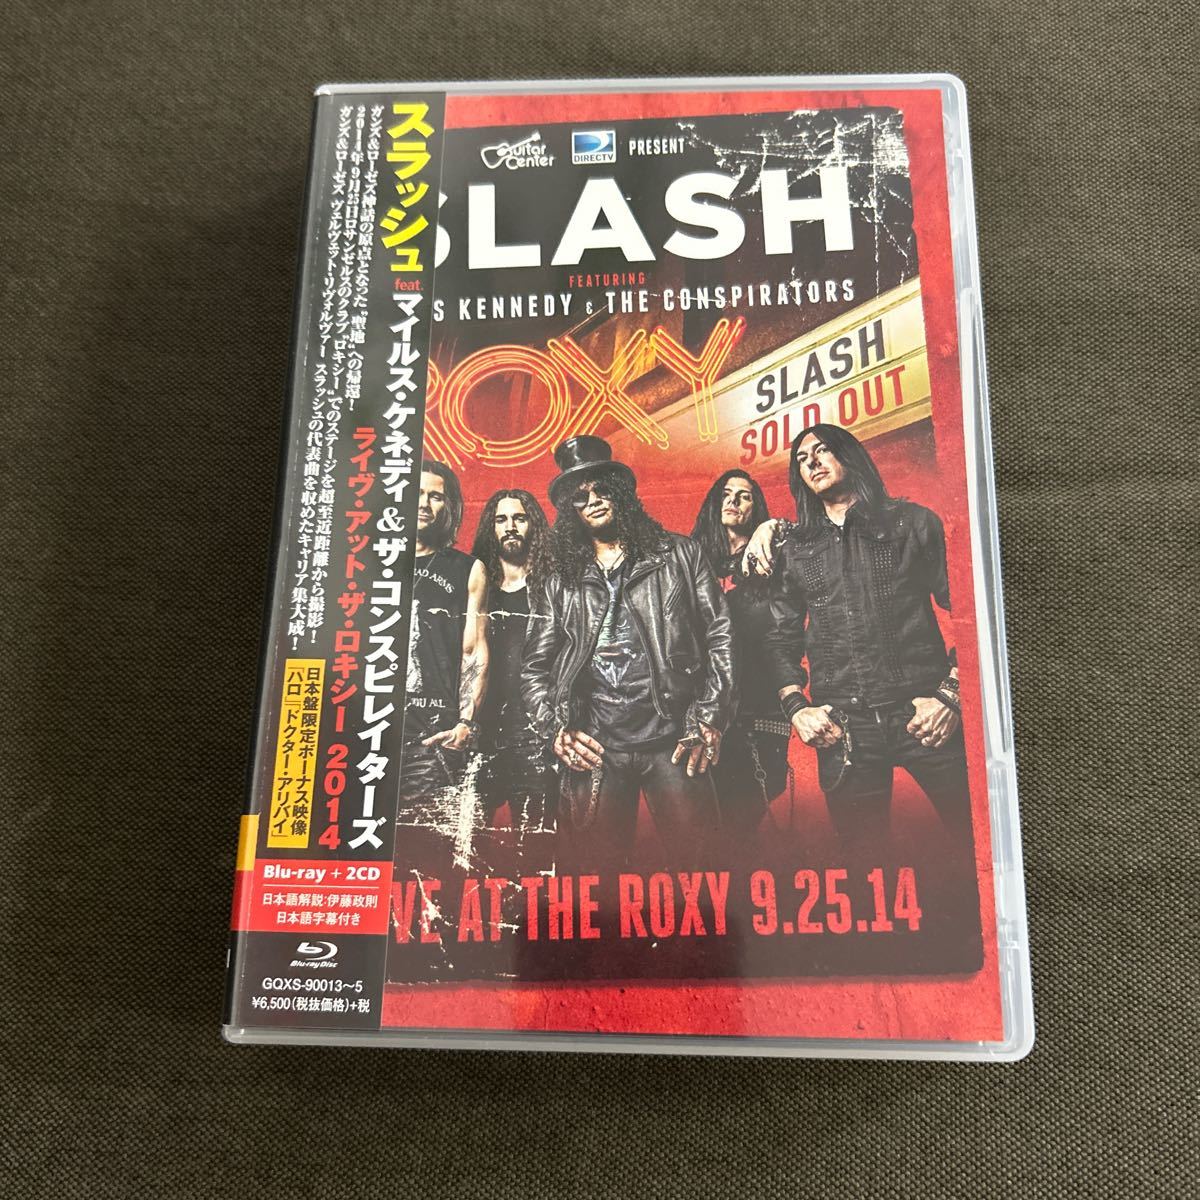  slash feat. миля s*keneti~ жить * at * The * Roxy 2014( первый раз производство ограниченая версия )(Blu-ray + 2CD)